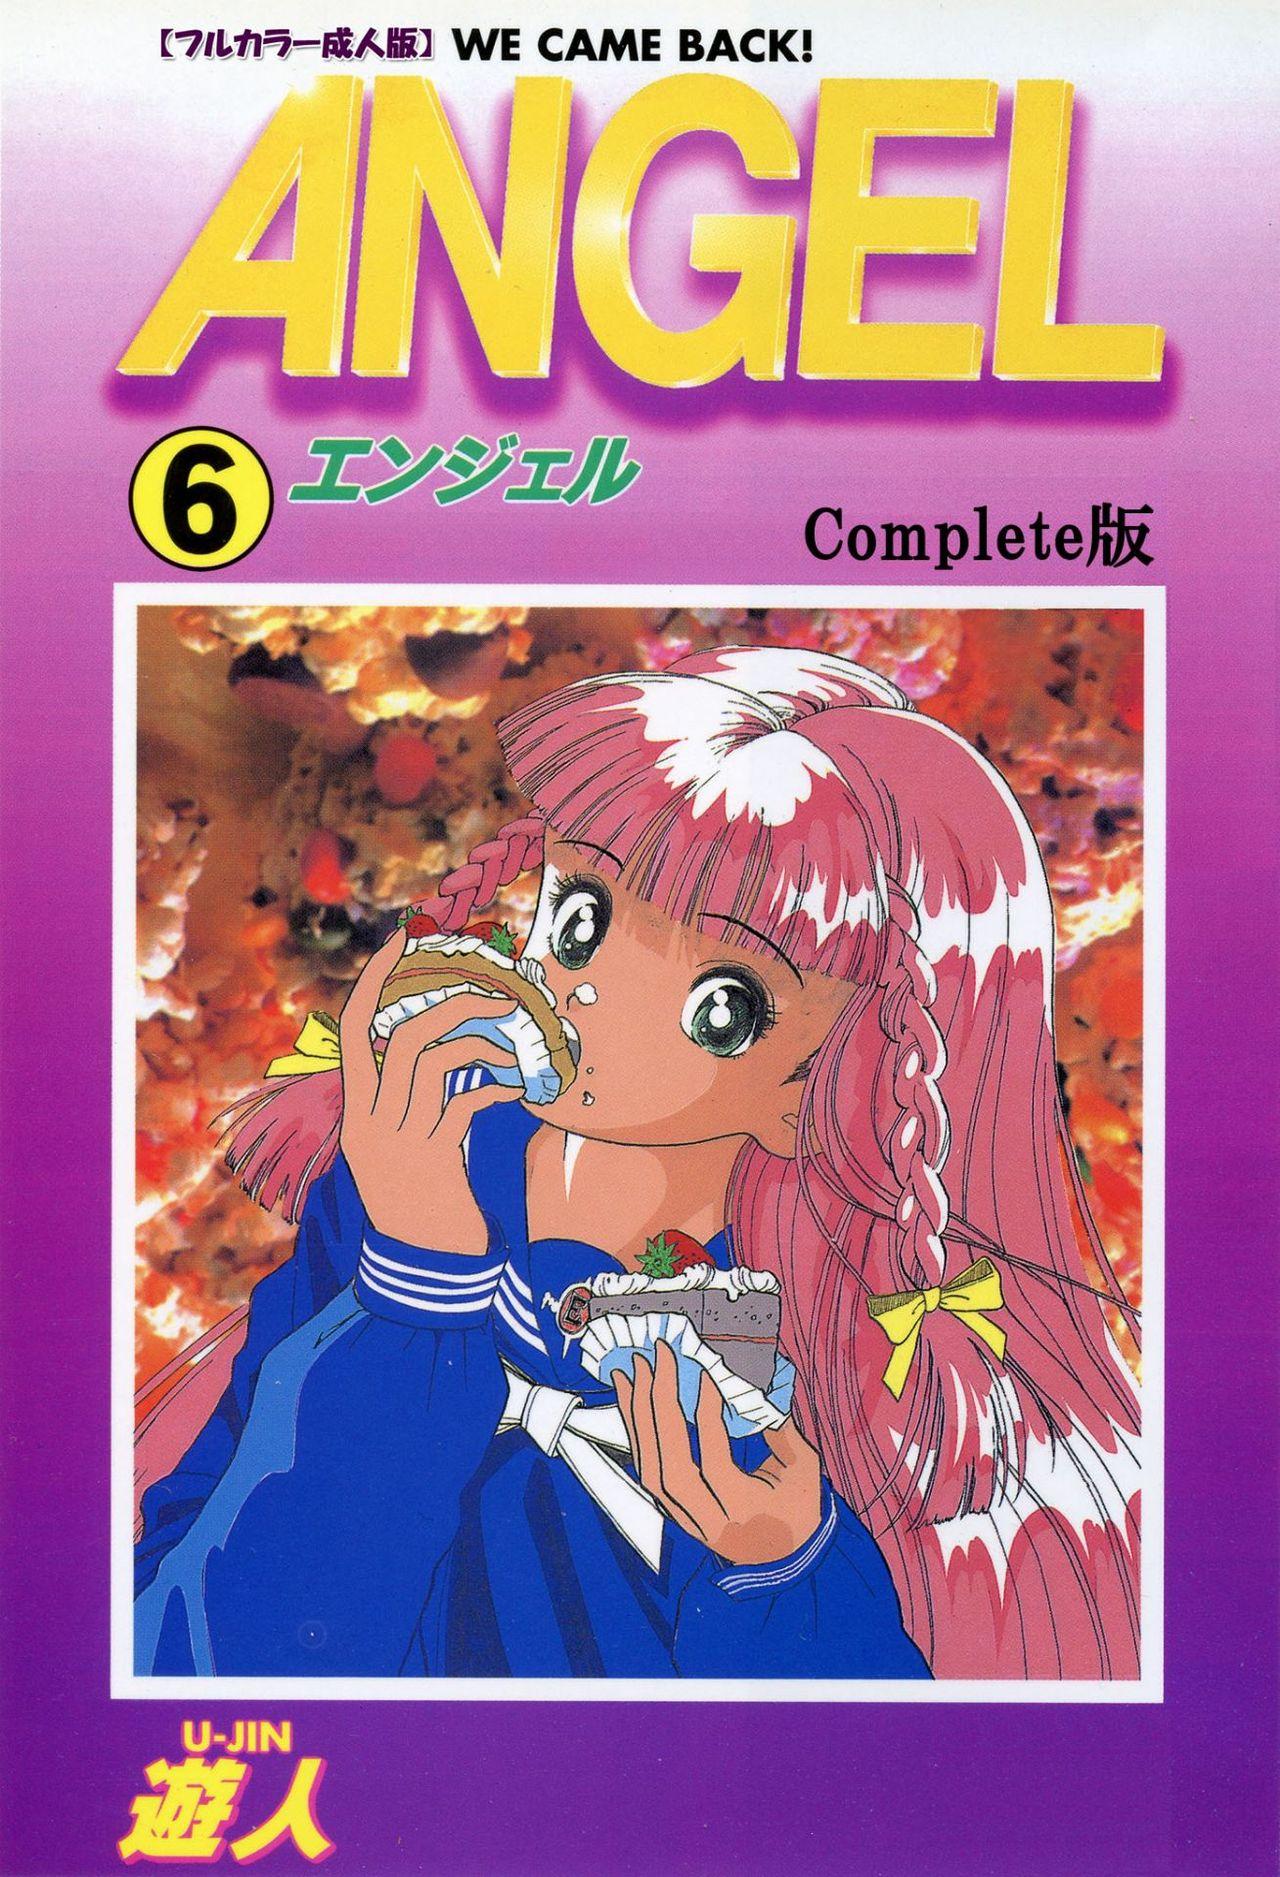 Amatures Gone Wild ANGEL 6 Completeban Massive - Picture 1